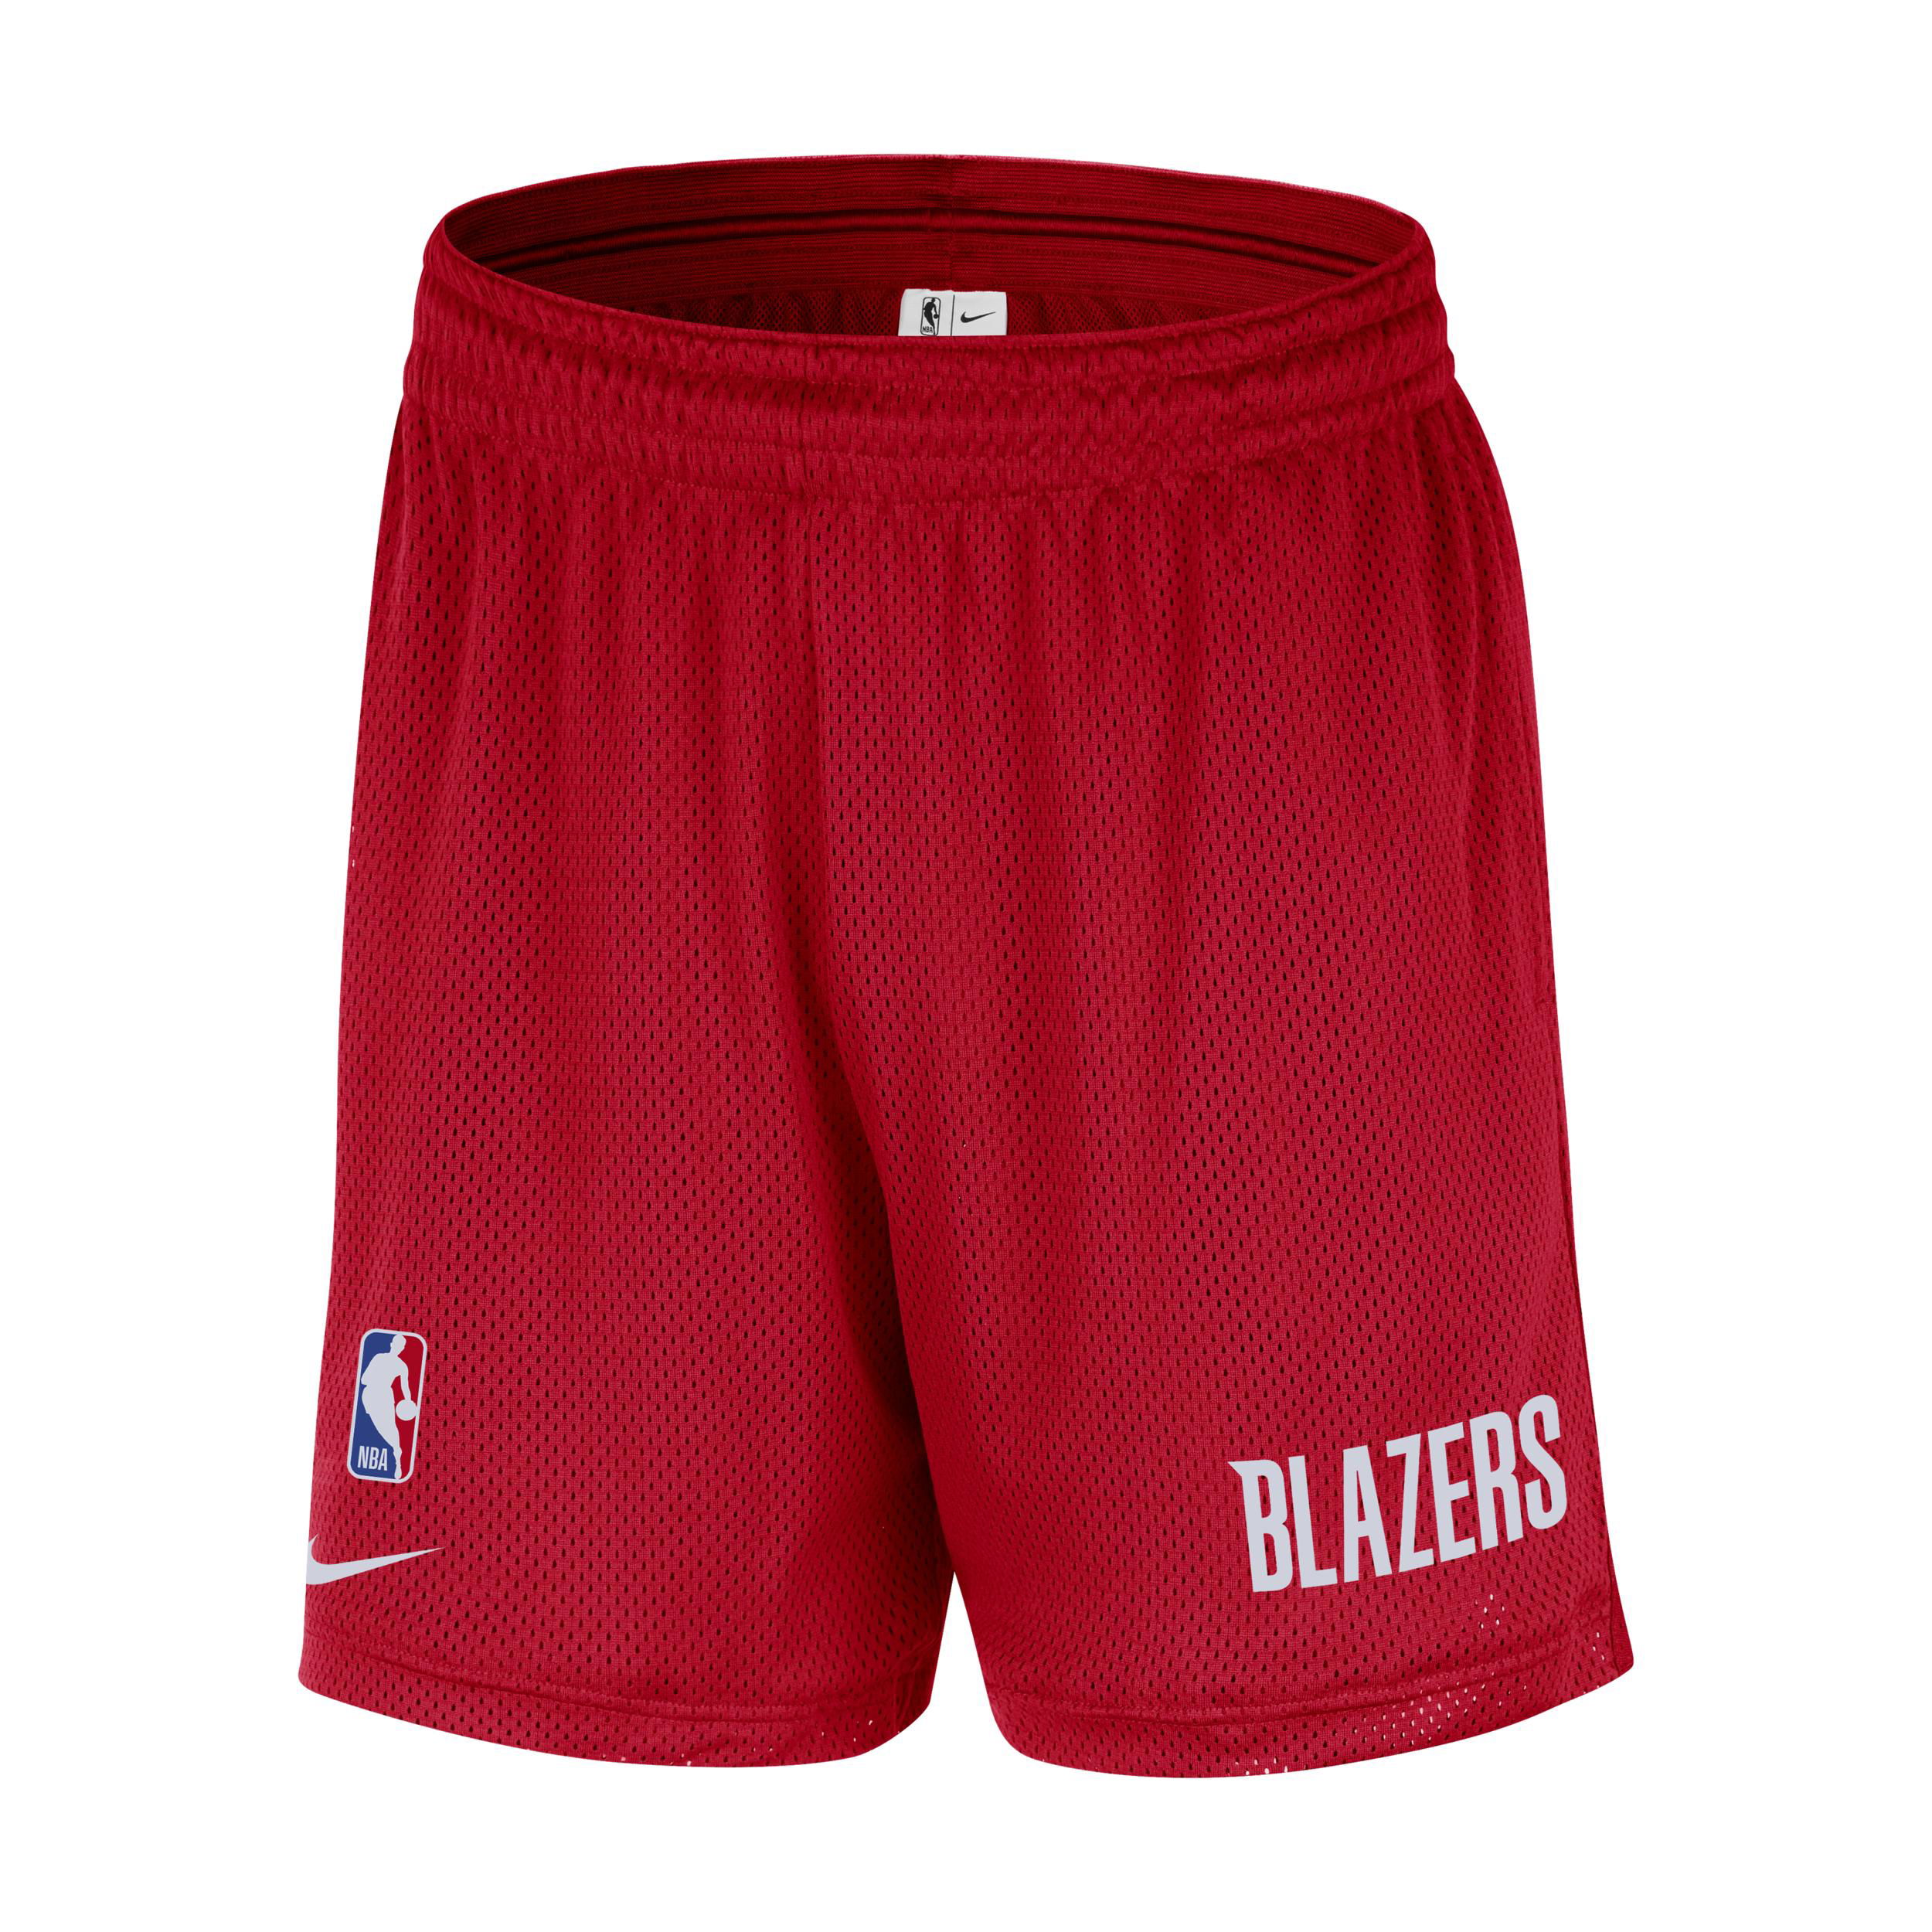 Portland Trail Blazers Nike Men's NBA Mesh Shorts by NIKE